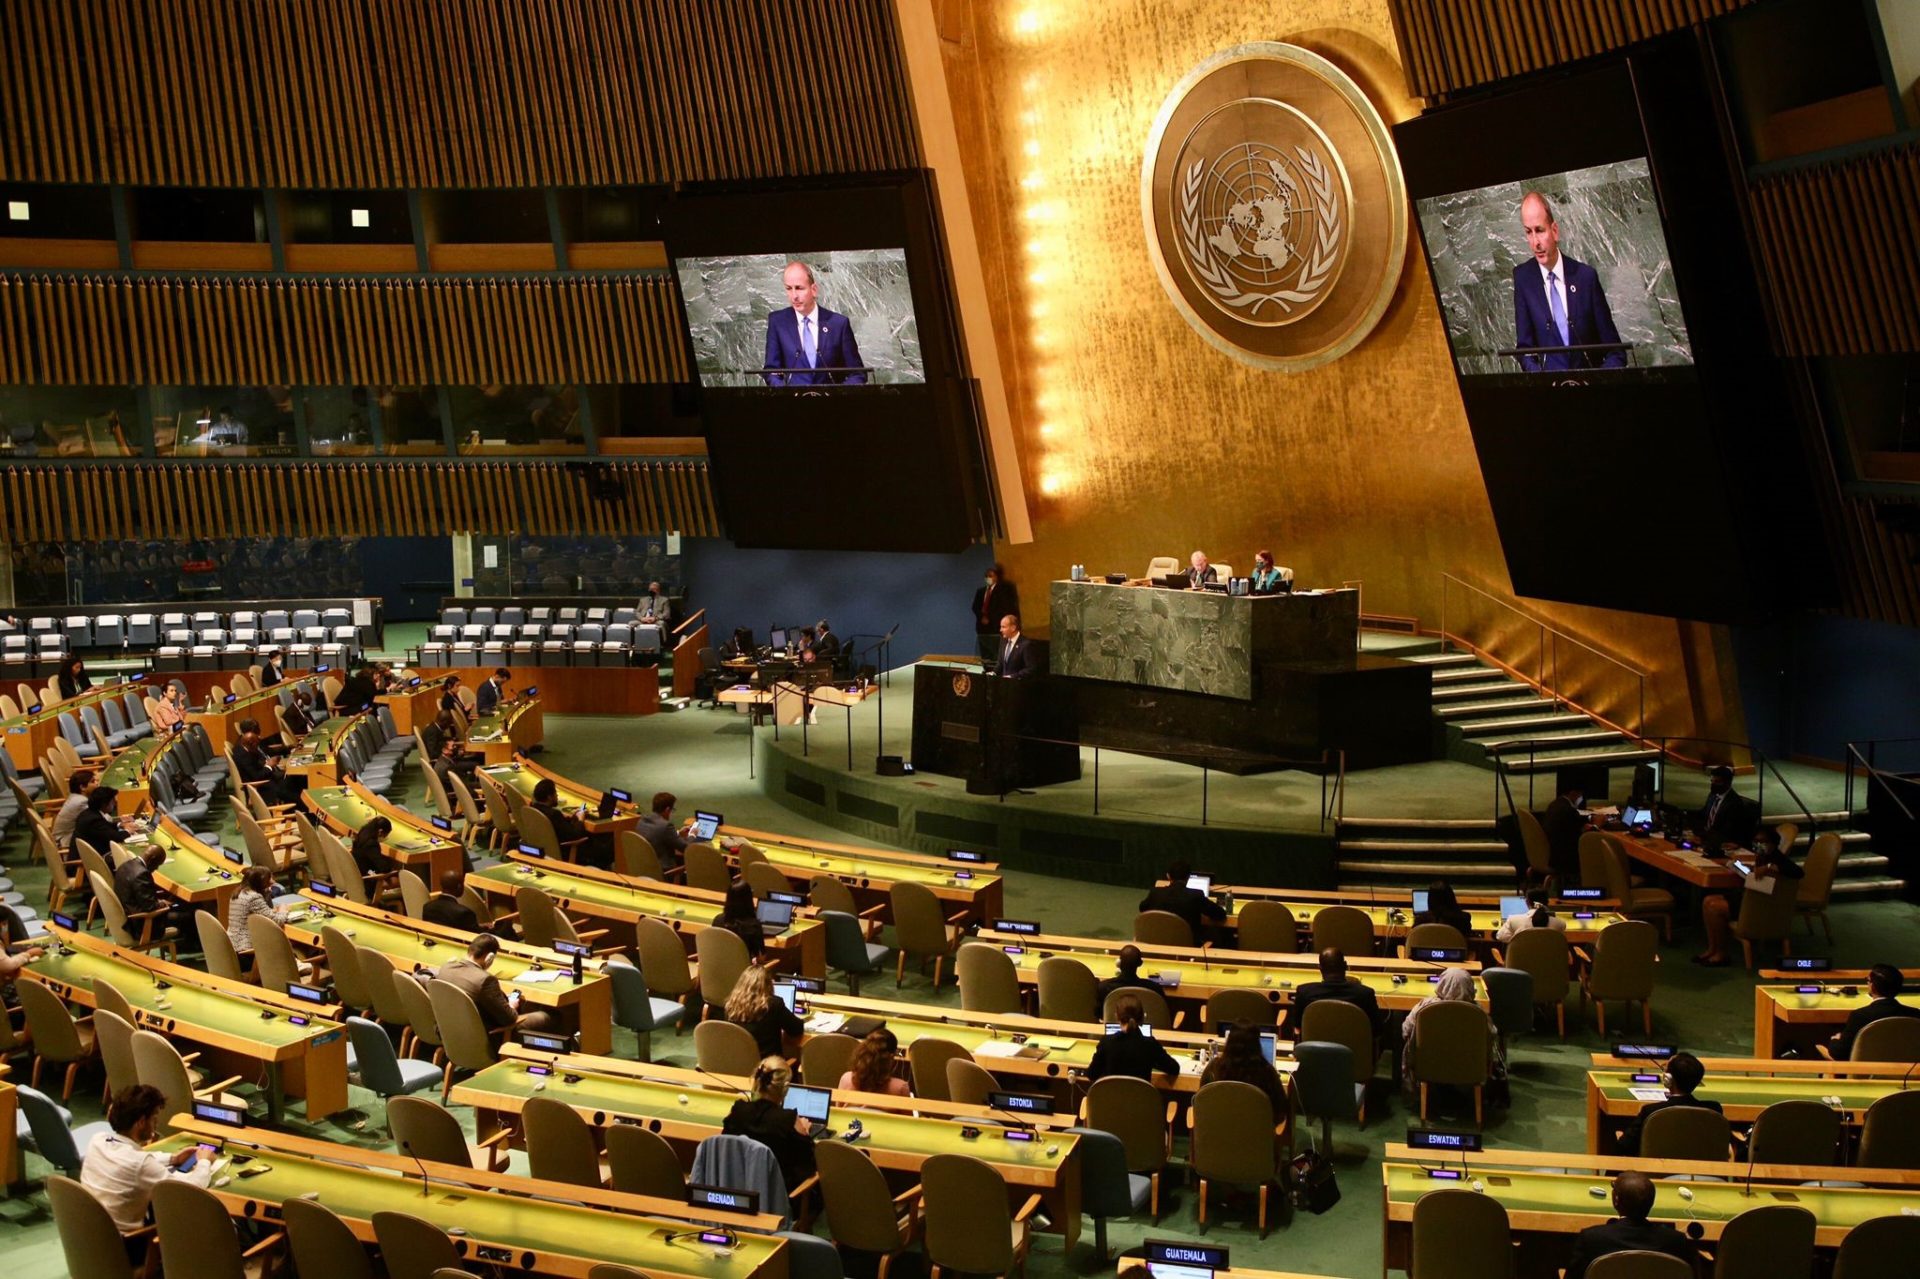 Micheál Martin addresses the UN General Assembly. Image: GIS Press